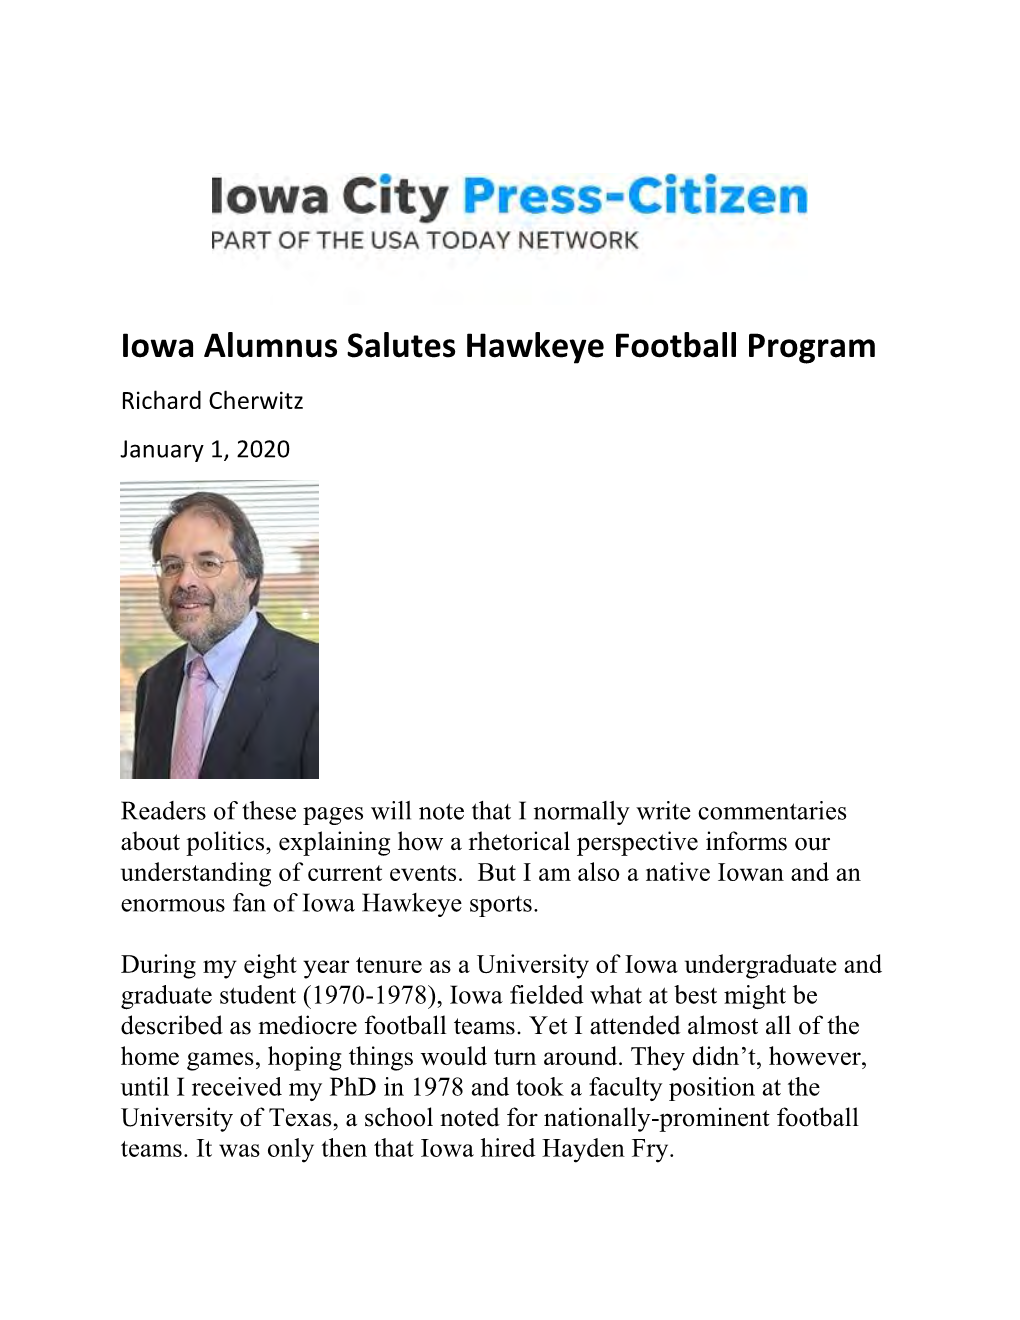 Iowa Alumnus Salutes Hawkeye Football Program Richard Cherwitz January 1, 2020